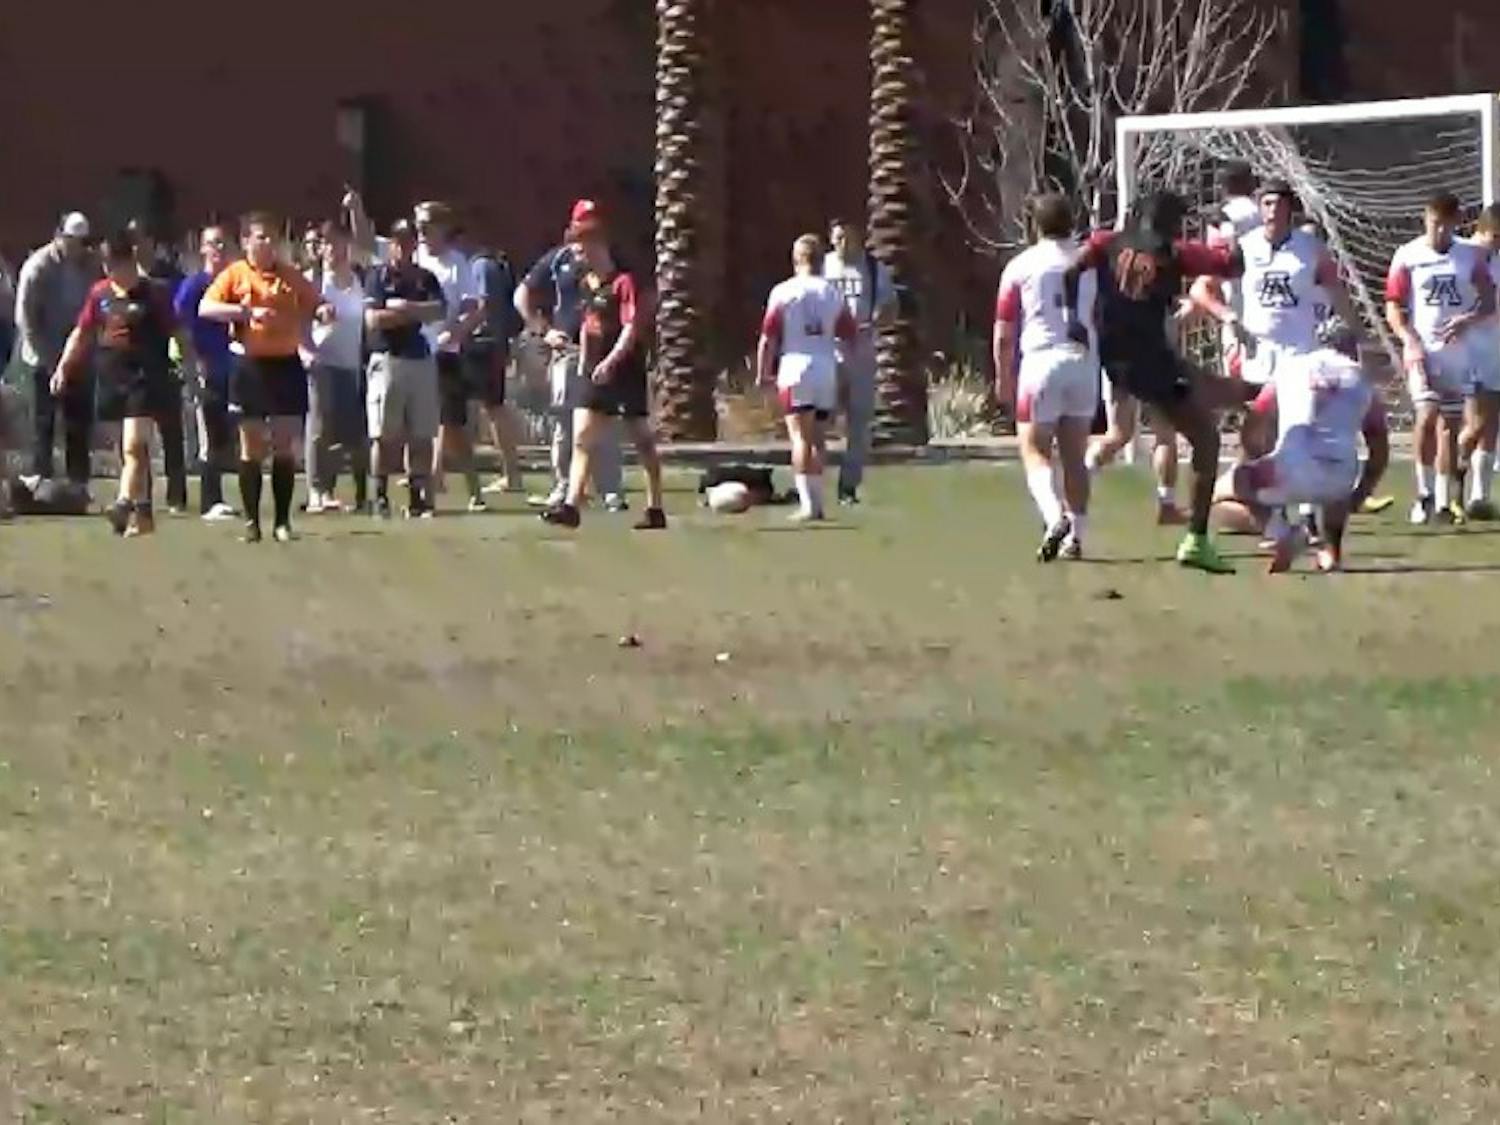 Rugby Video Still.jpg